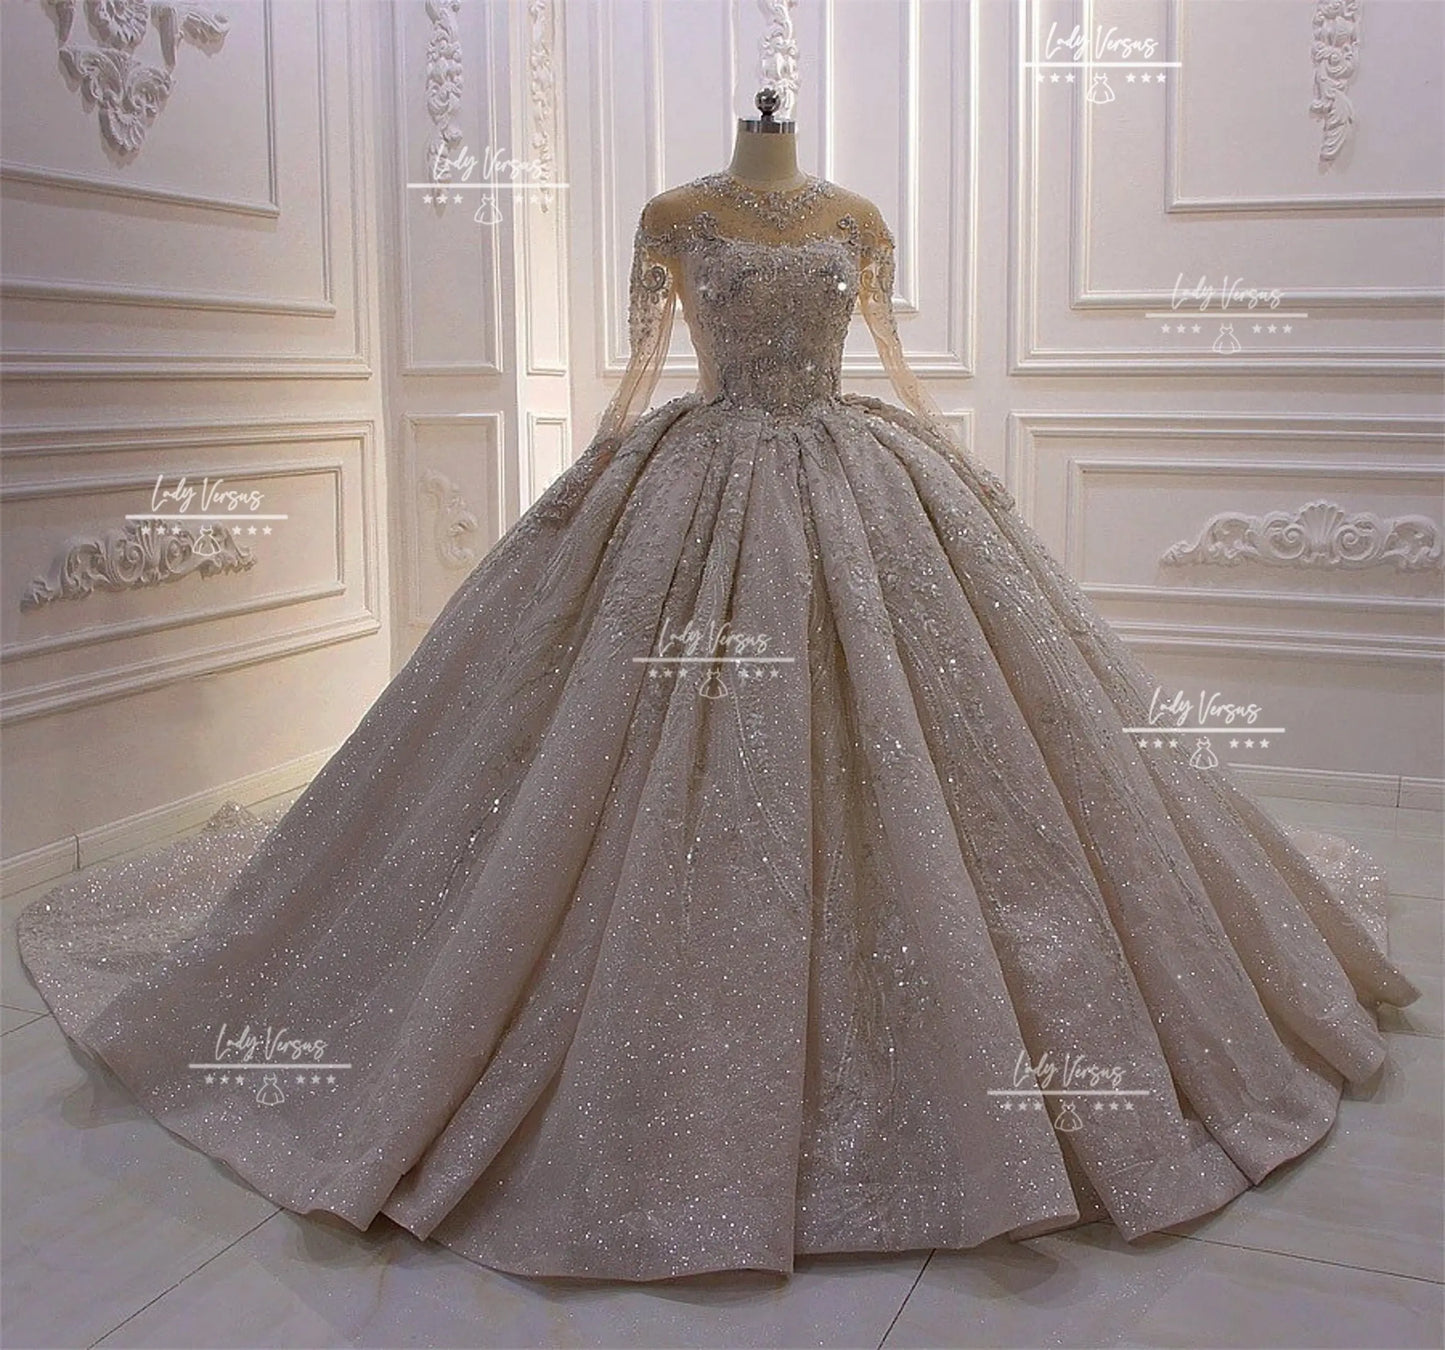 Luxury bridal princess dress/ Extravagant bridal gown/Gorgeous hand beaded wedding dress/ ball gown